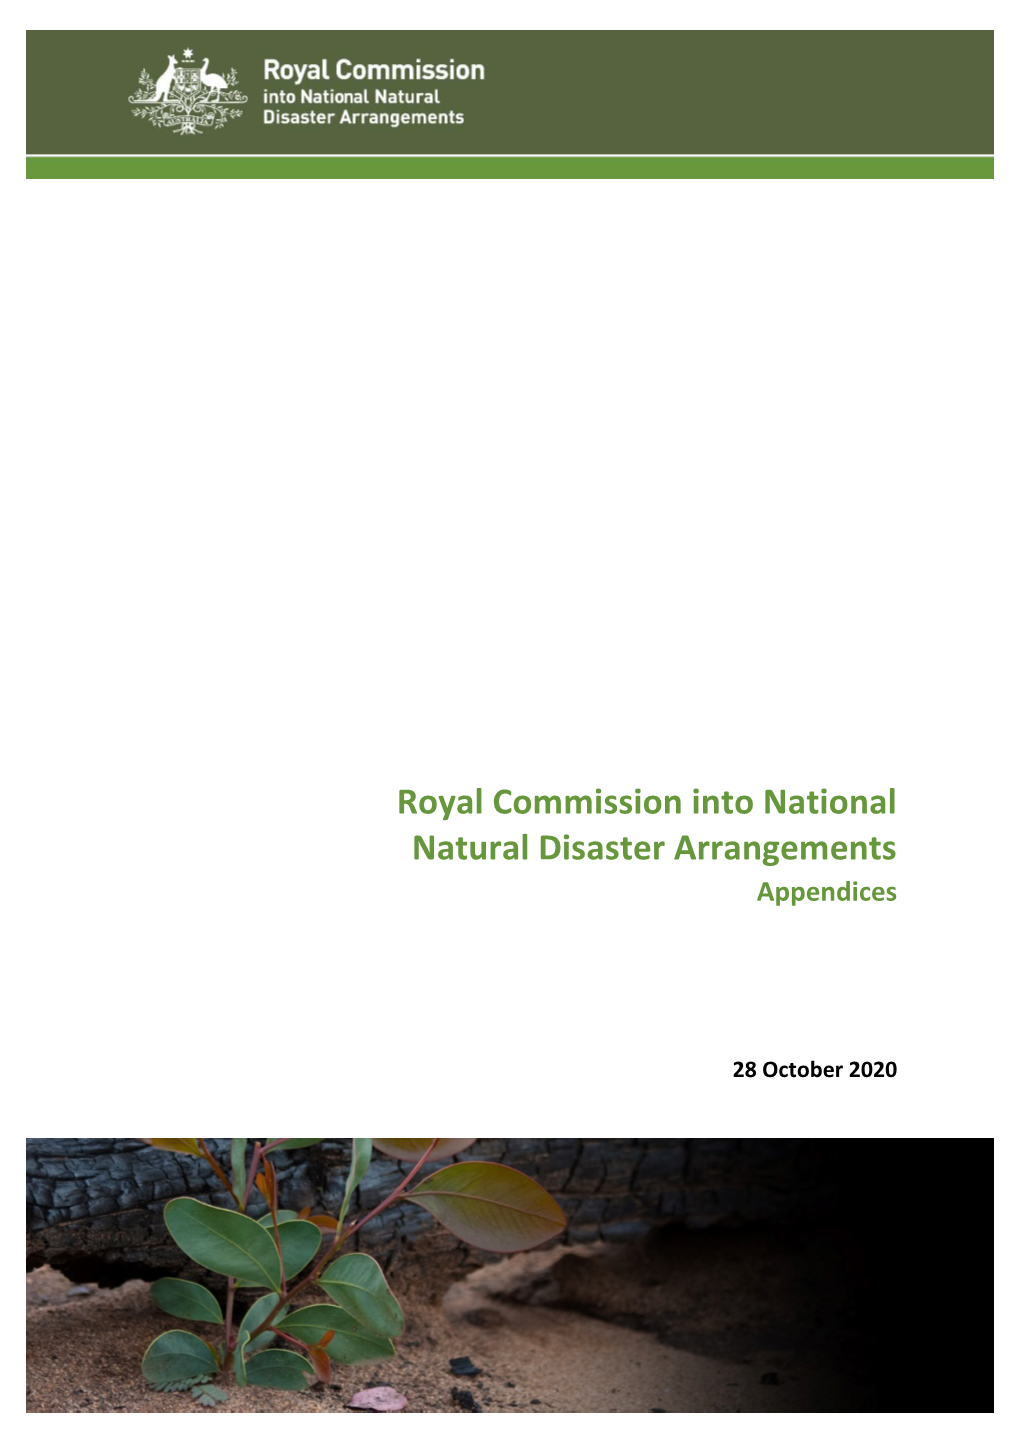 Royal Commission Into National Natural Disaster Arrangements Appendices